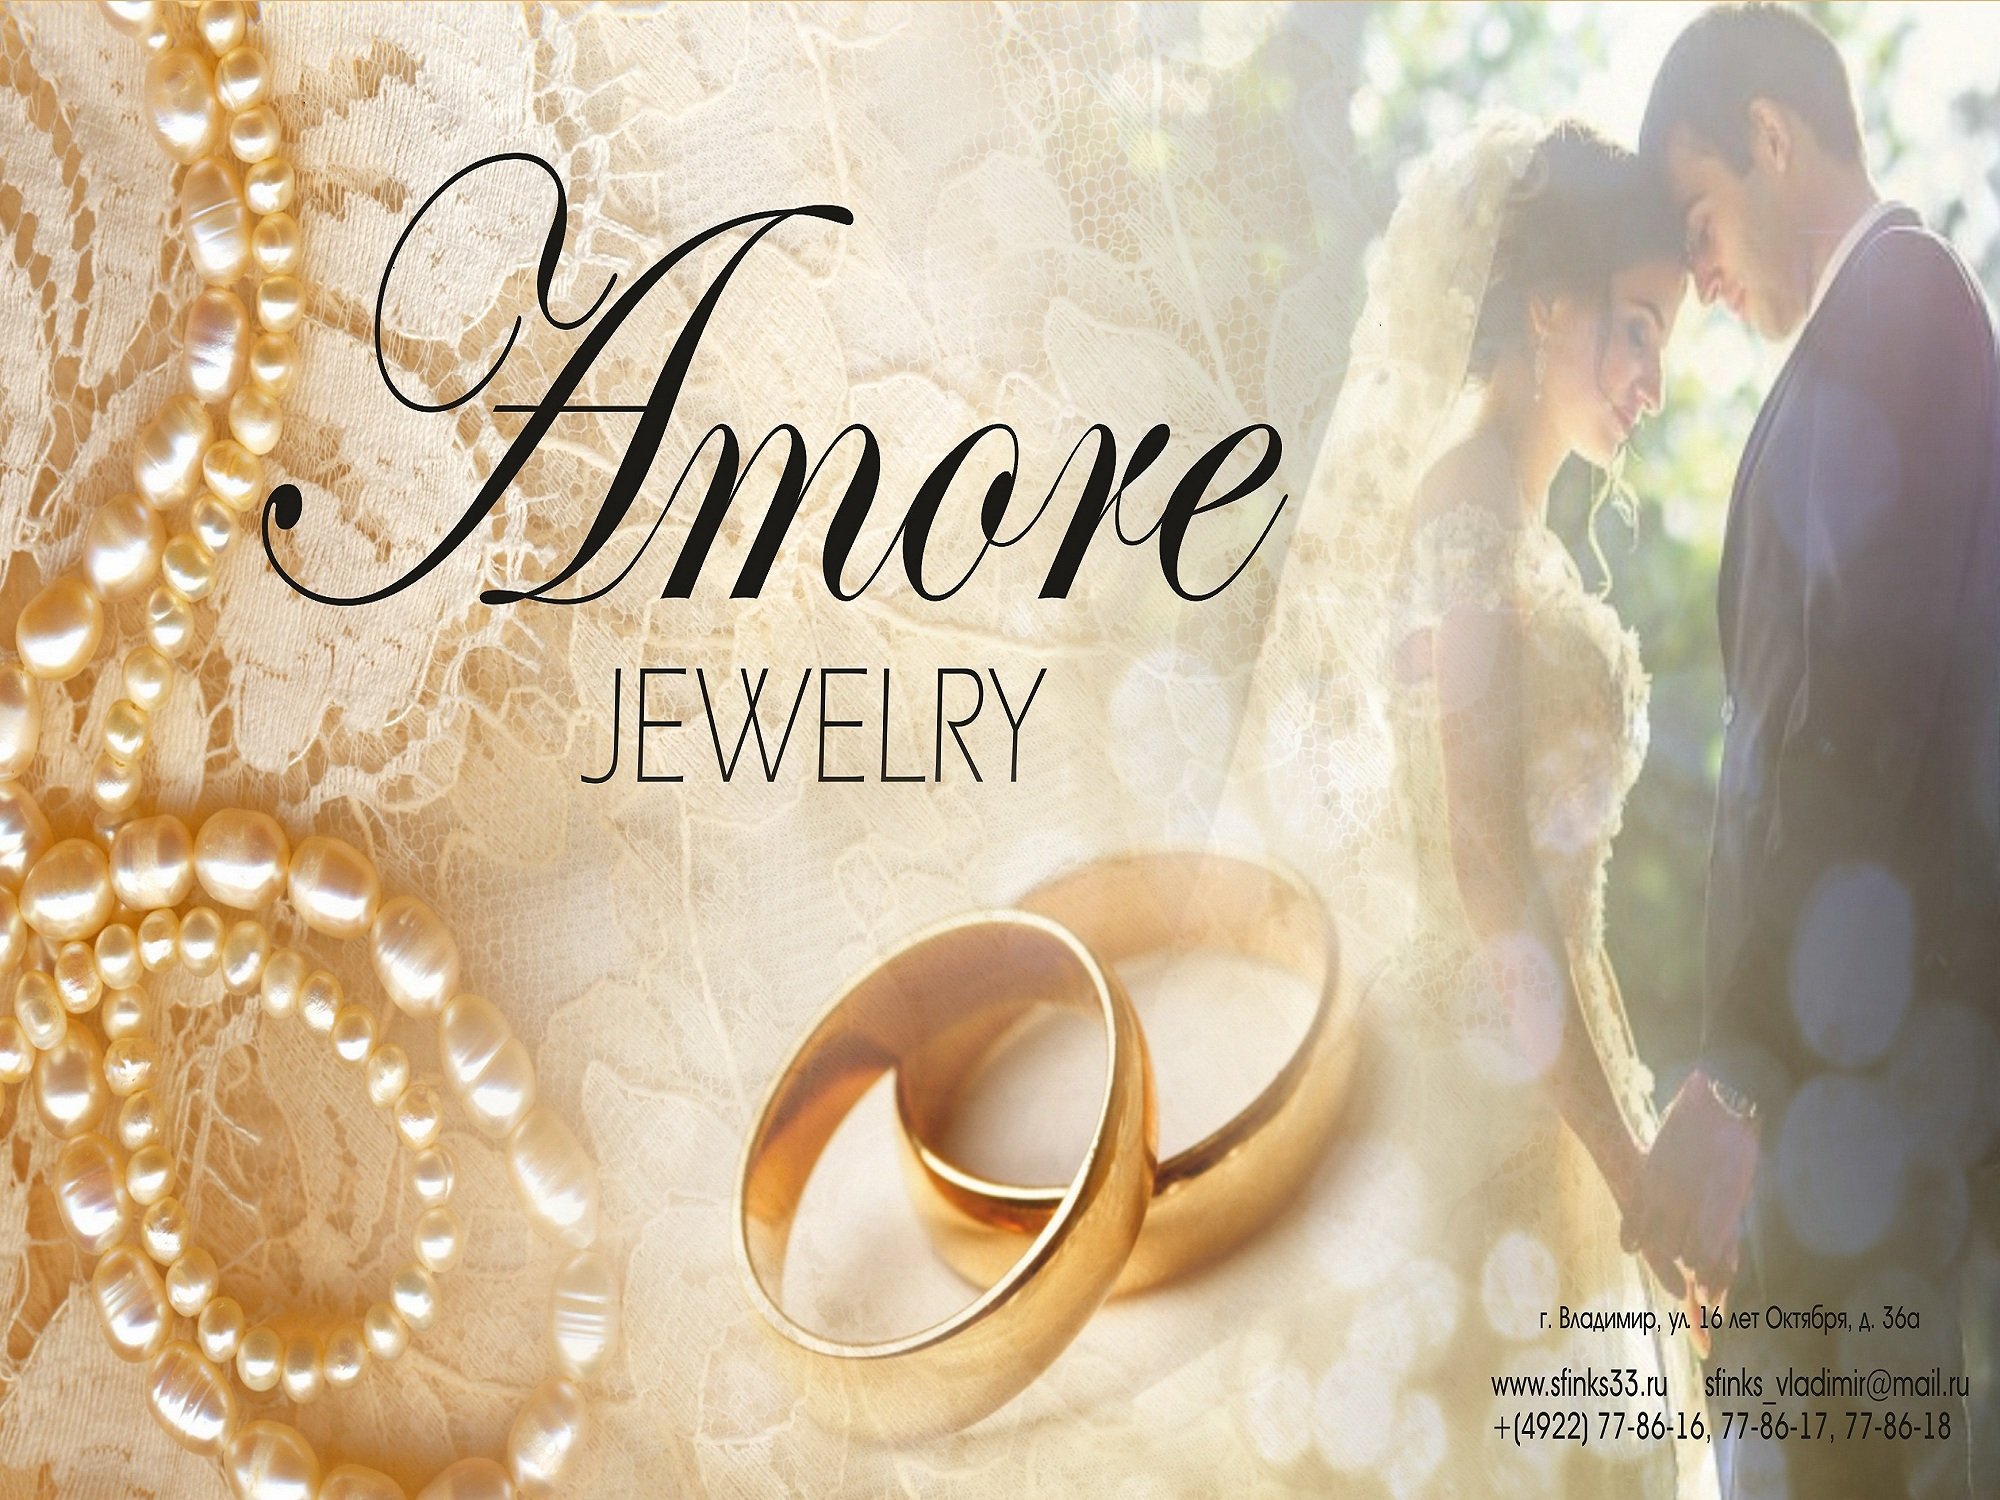 Amore Jewelry